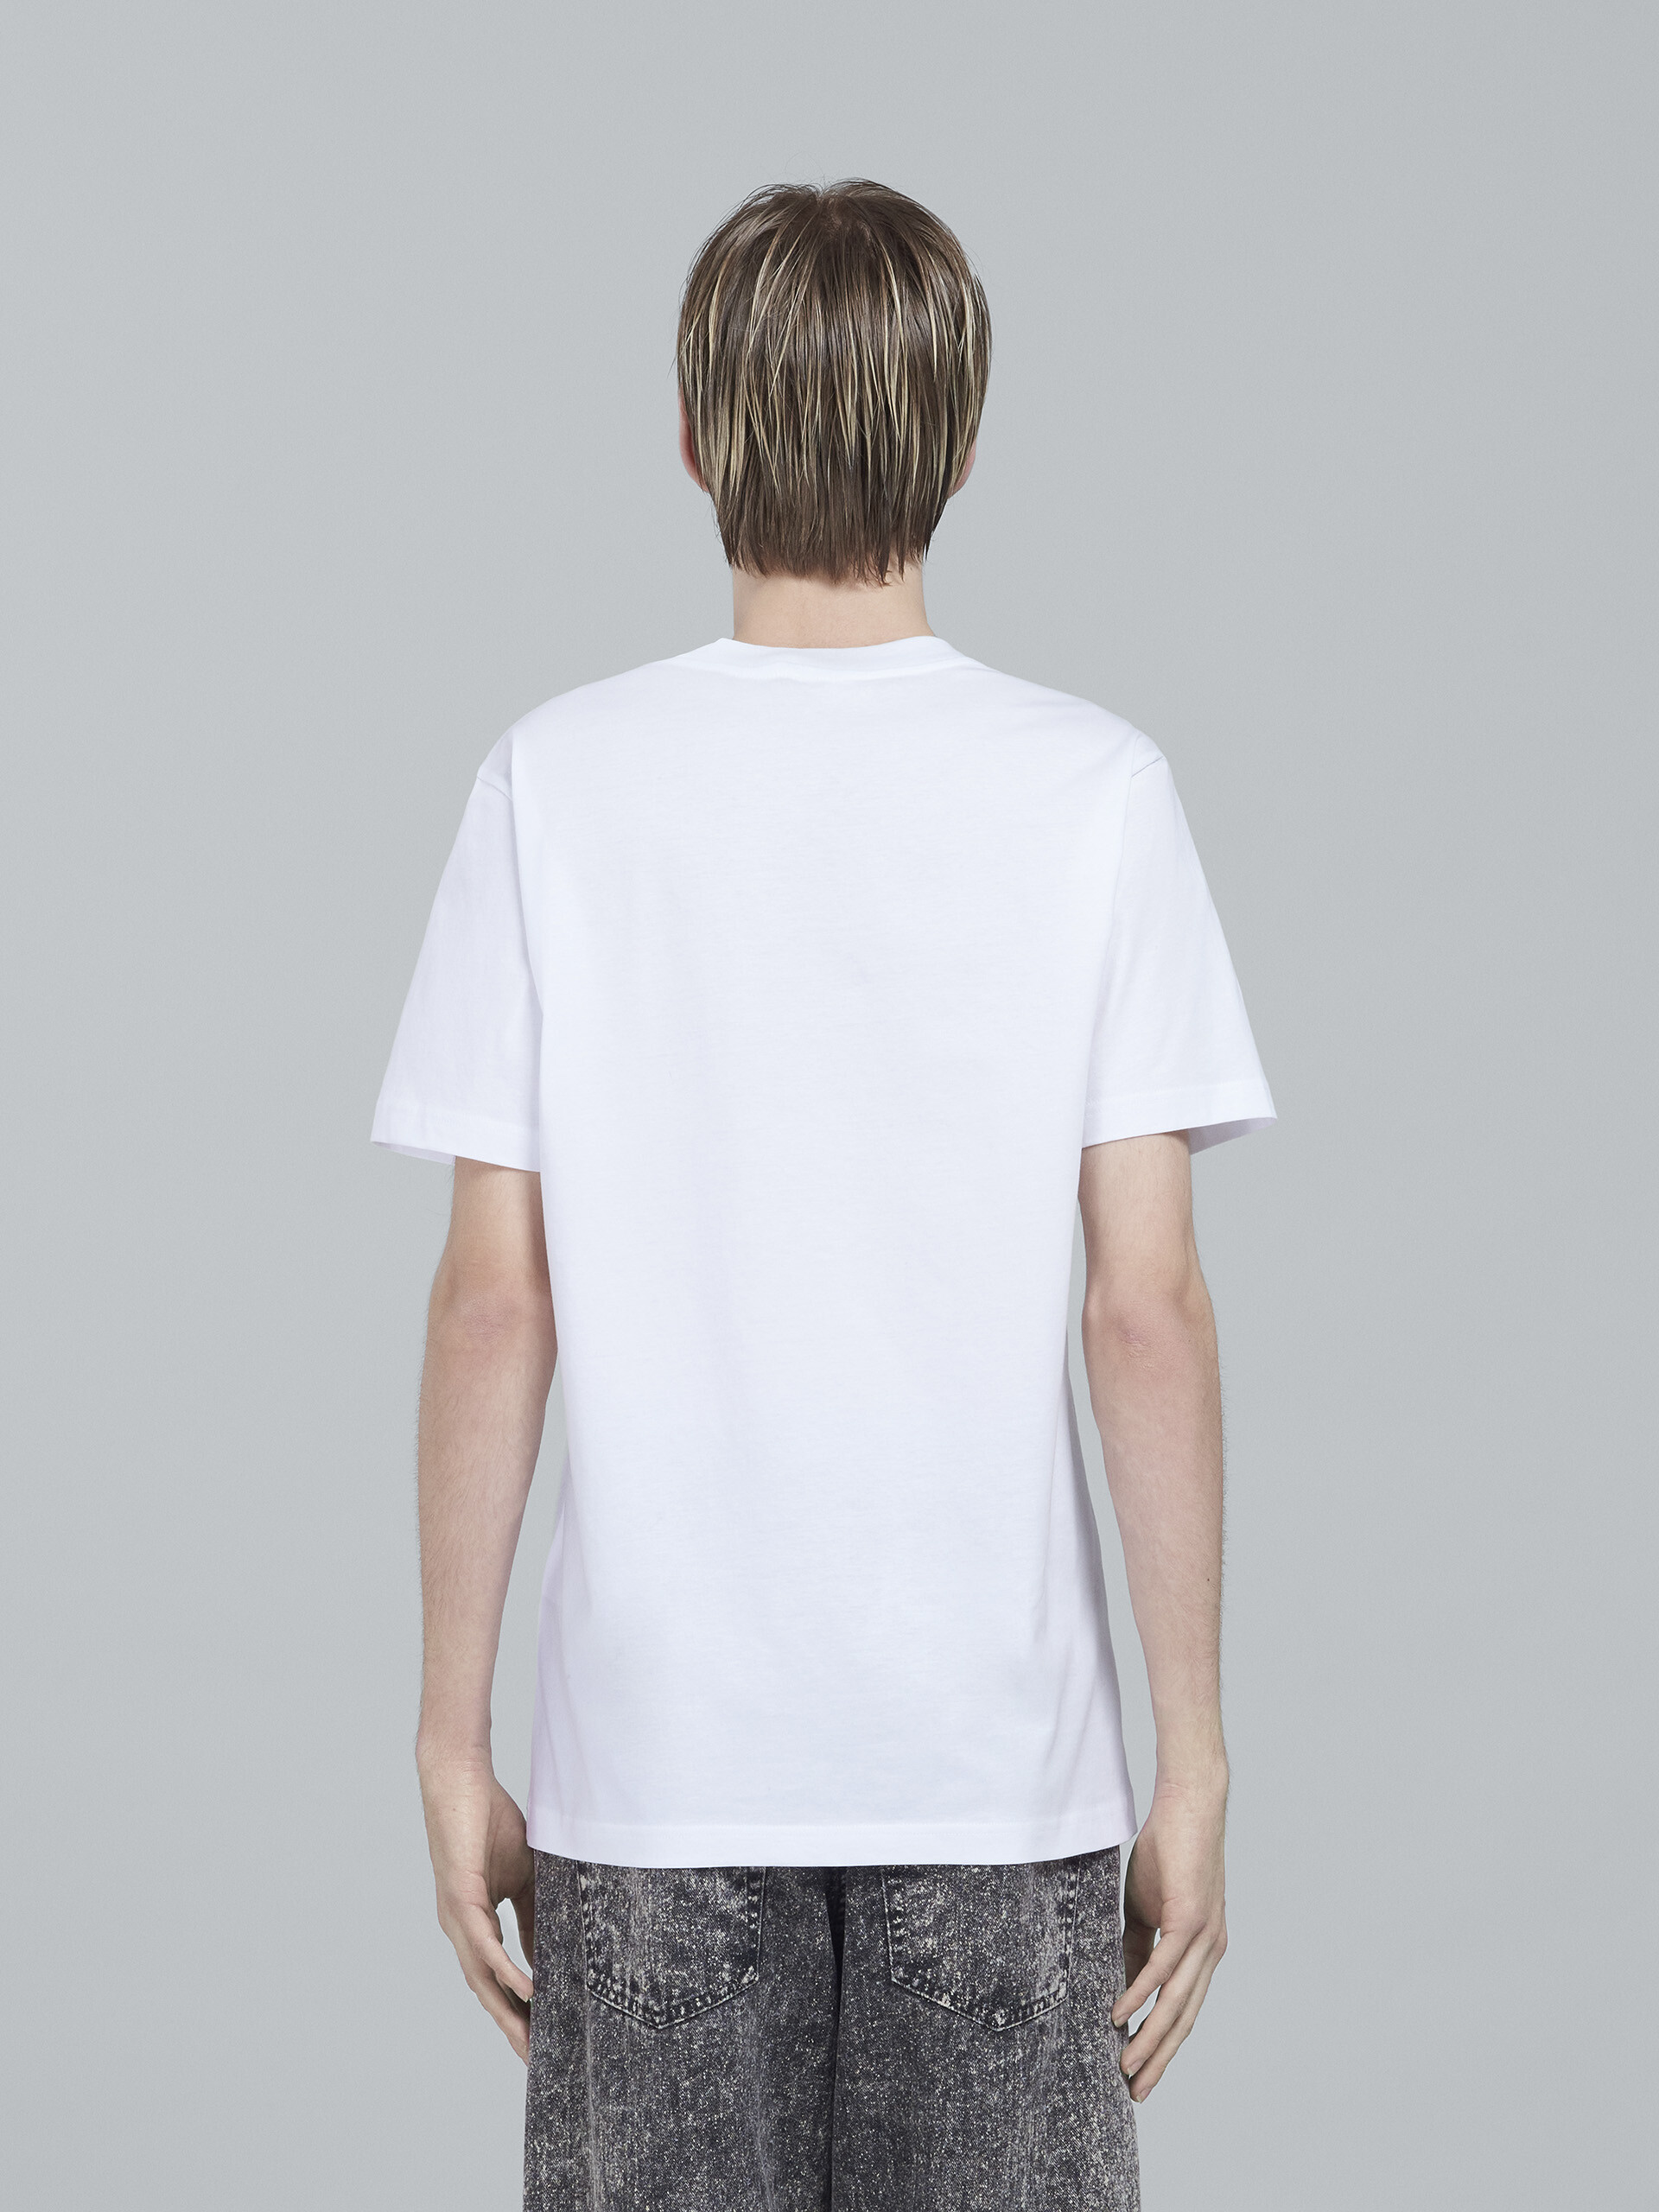 Scanned Logo print white jersey T-shirt - T-shirts - Image 3